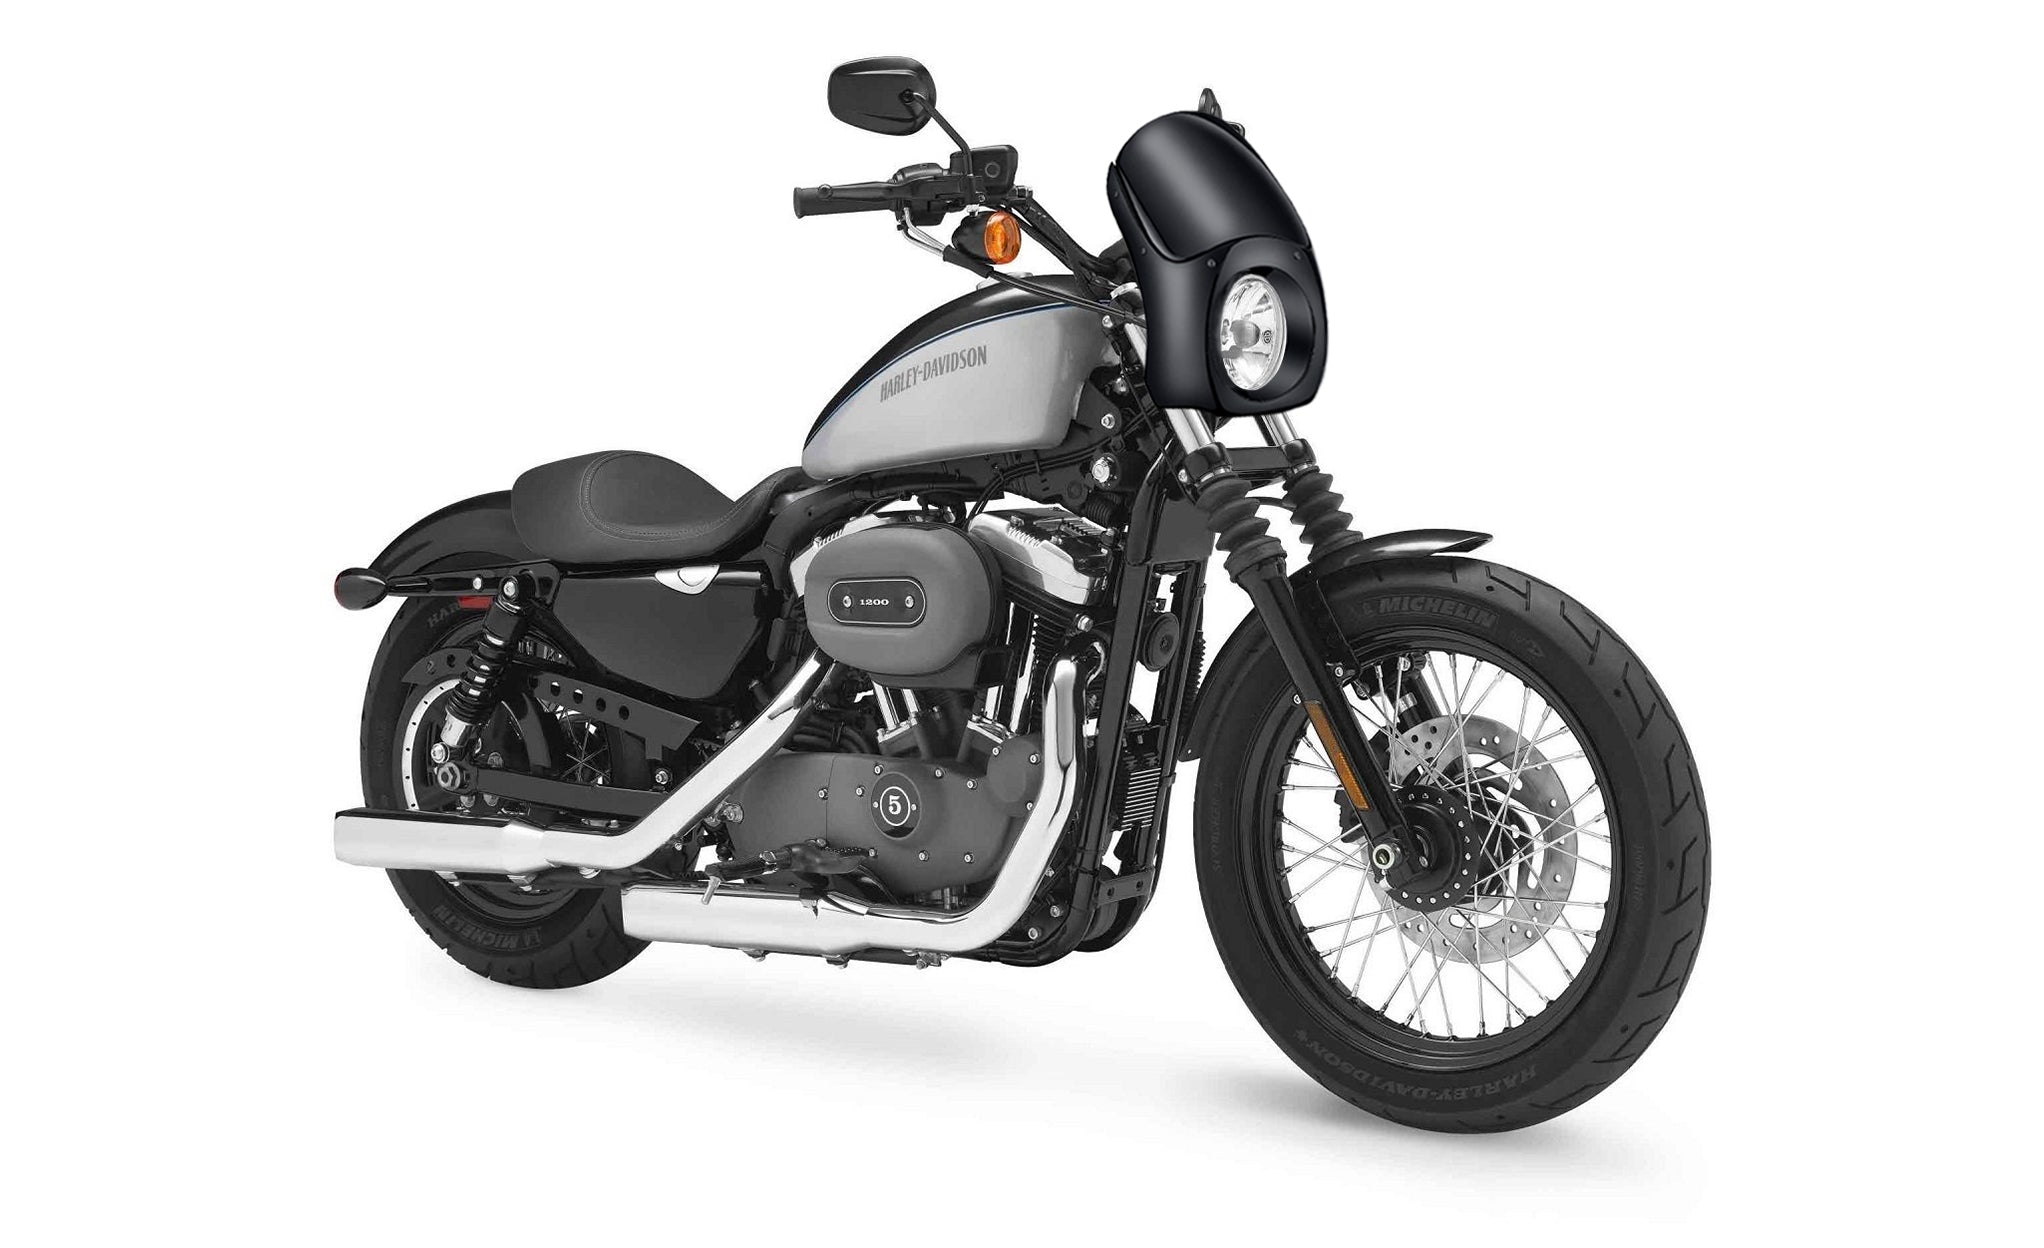 Viking Bronco Motorcycle Fairing For Harley Sportster 1200 Nightster XL1200N Gloss Black Bag on Bike View @expand